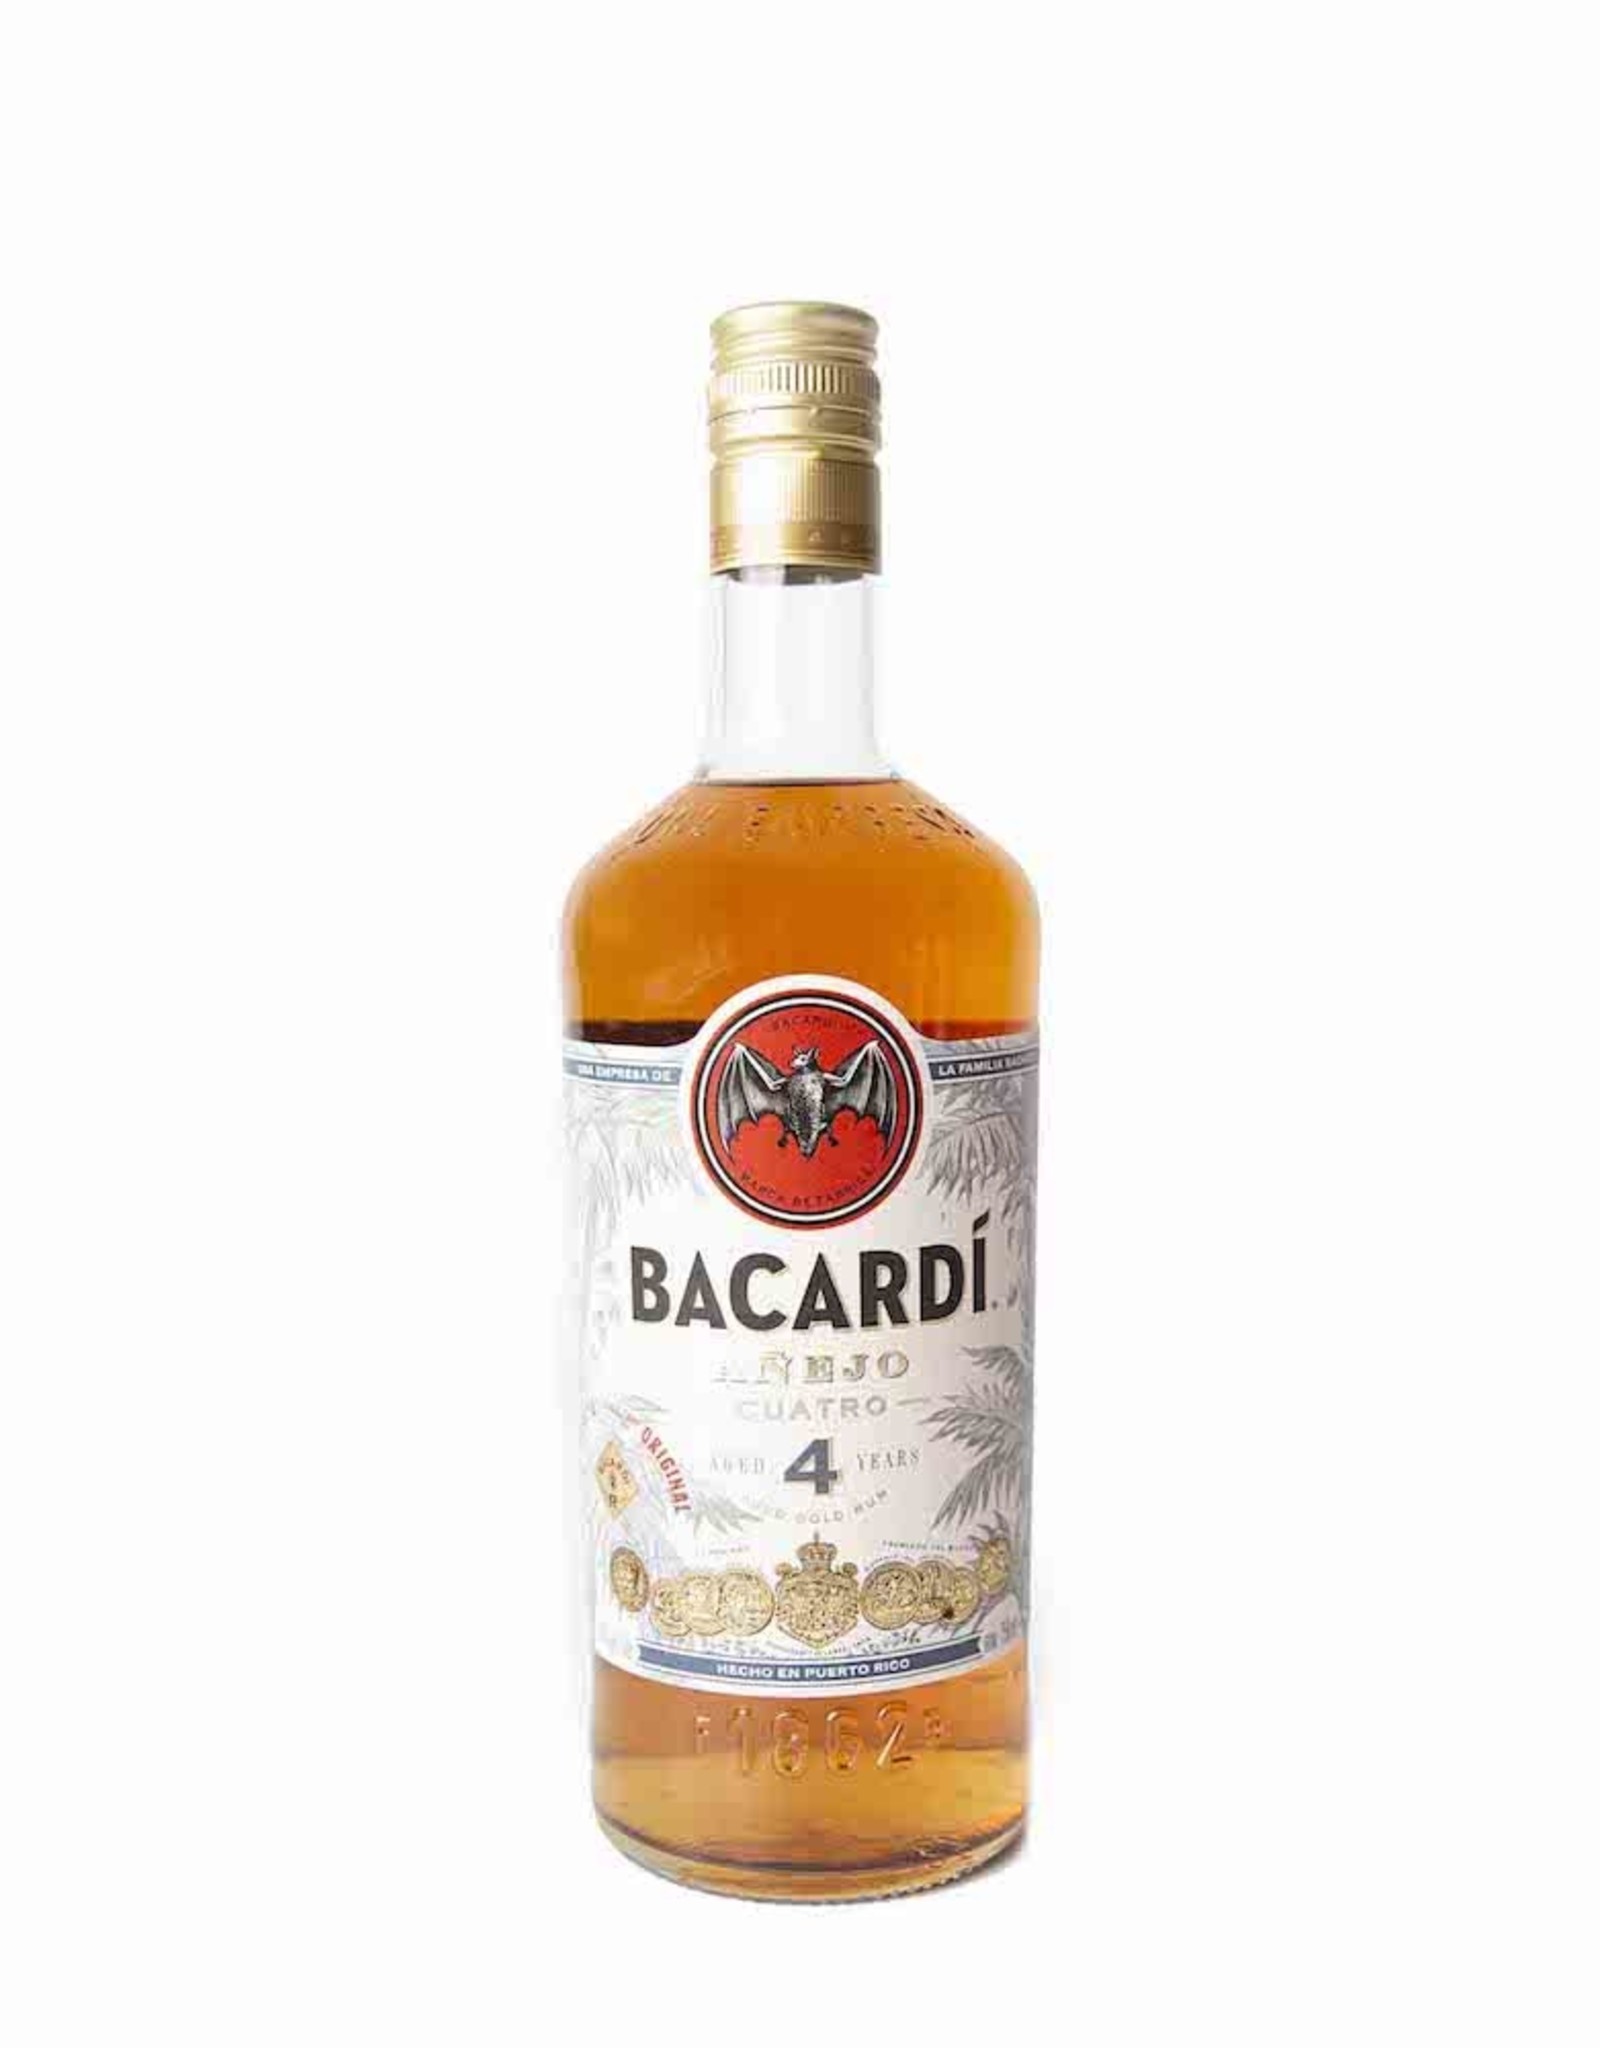 Bacardi Bacardi Anejo Aged 4 Years  Rum